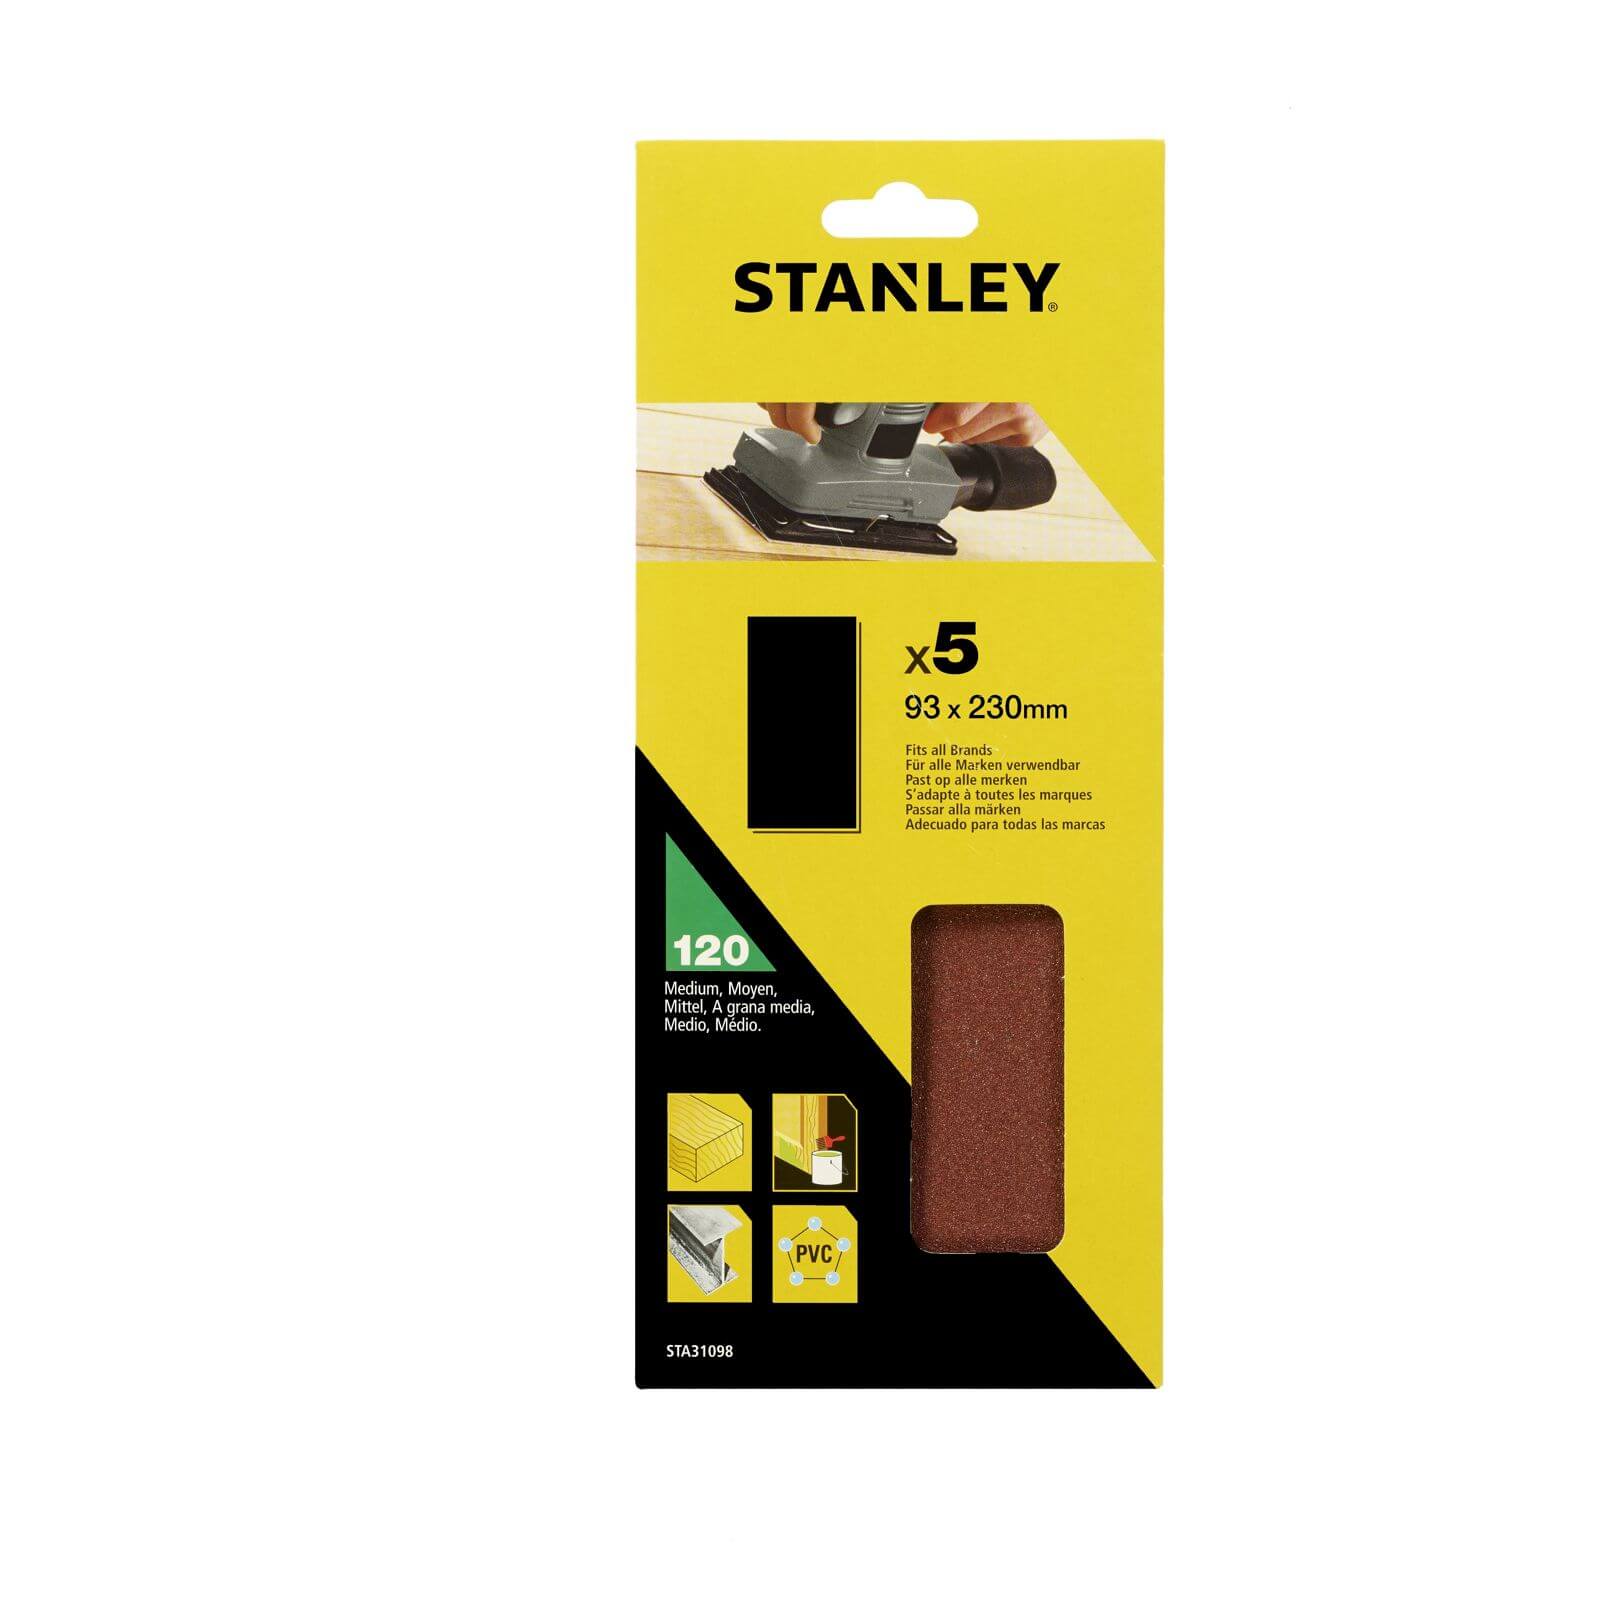 Stanley 1/3 Sheet Sander UNPunched Wire Clip 120G Sanding Sheets - STA31098-XJ